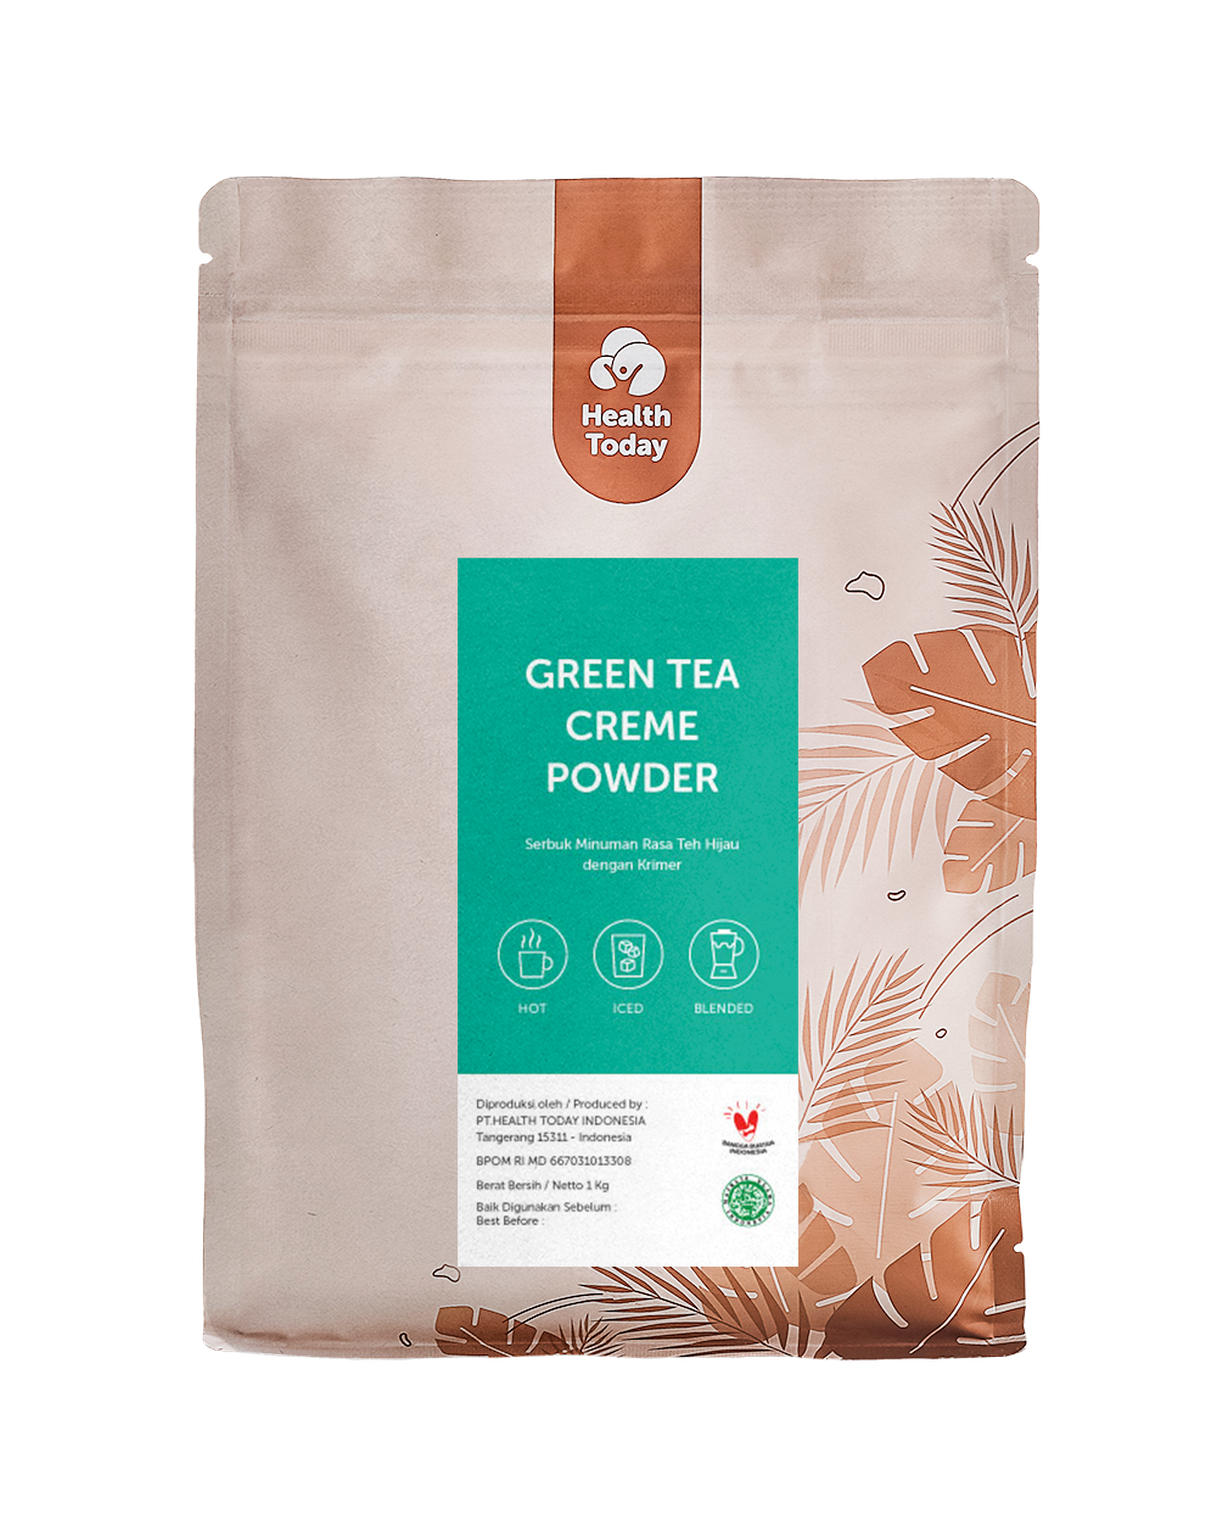 Health Today Powder Green Tea Creme 1 kg